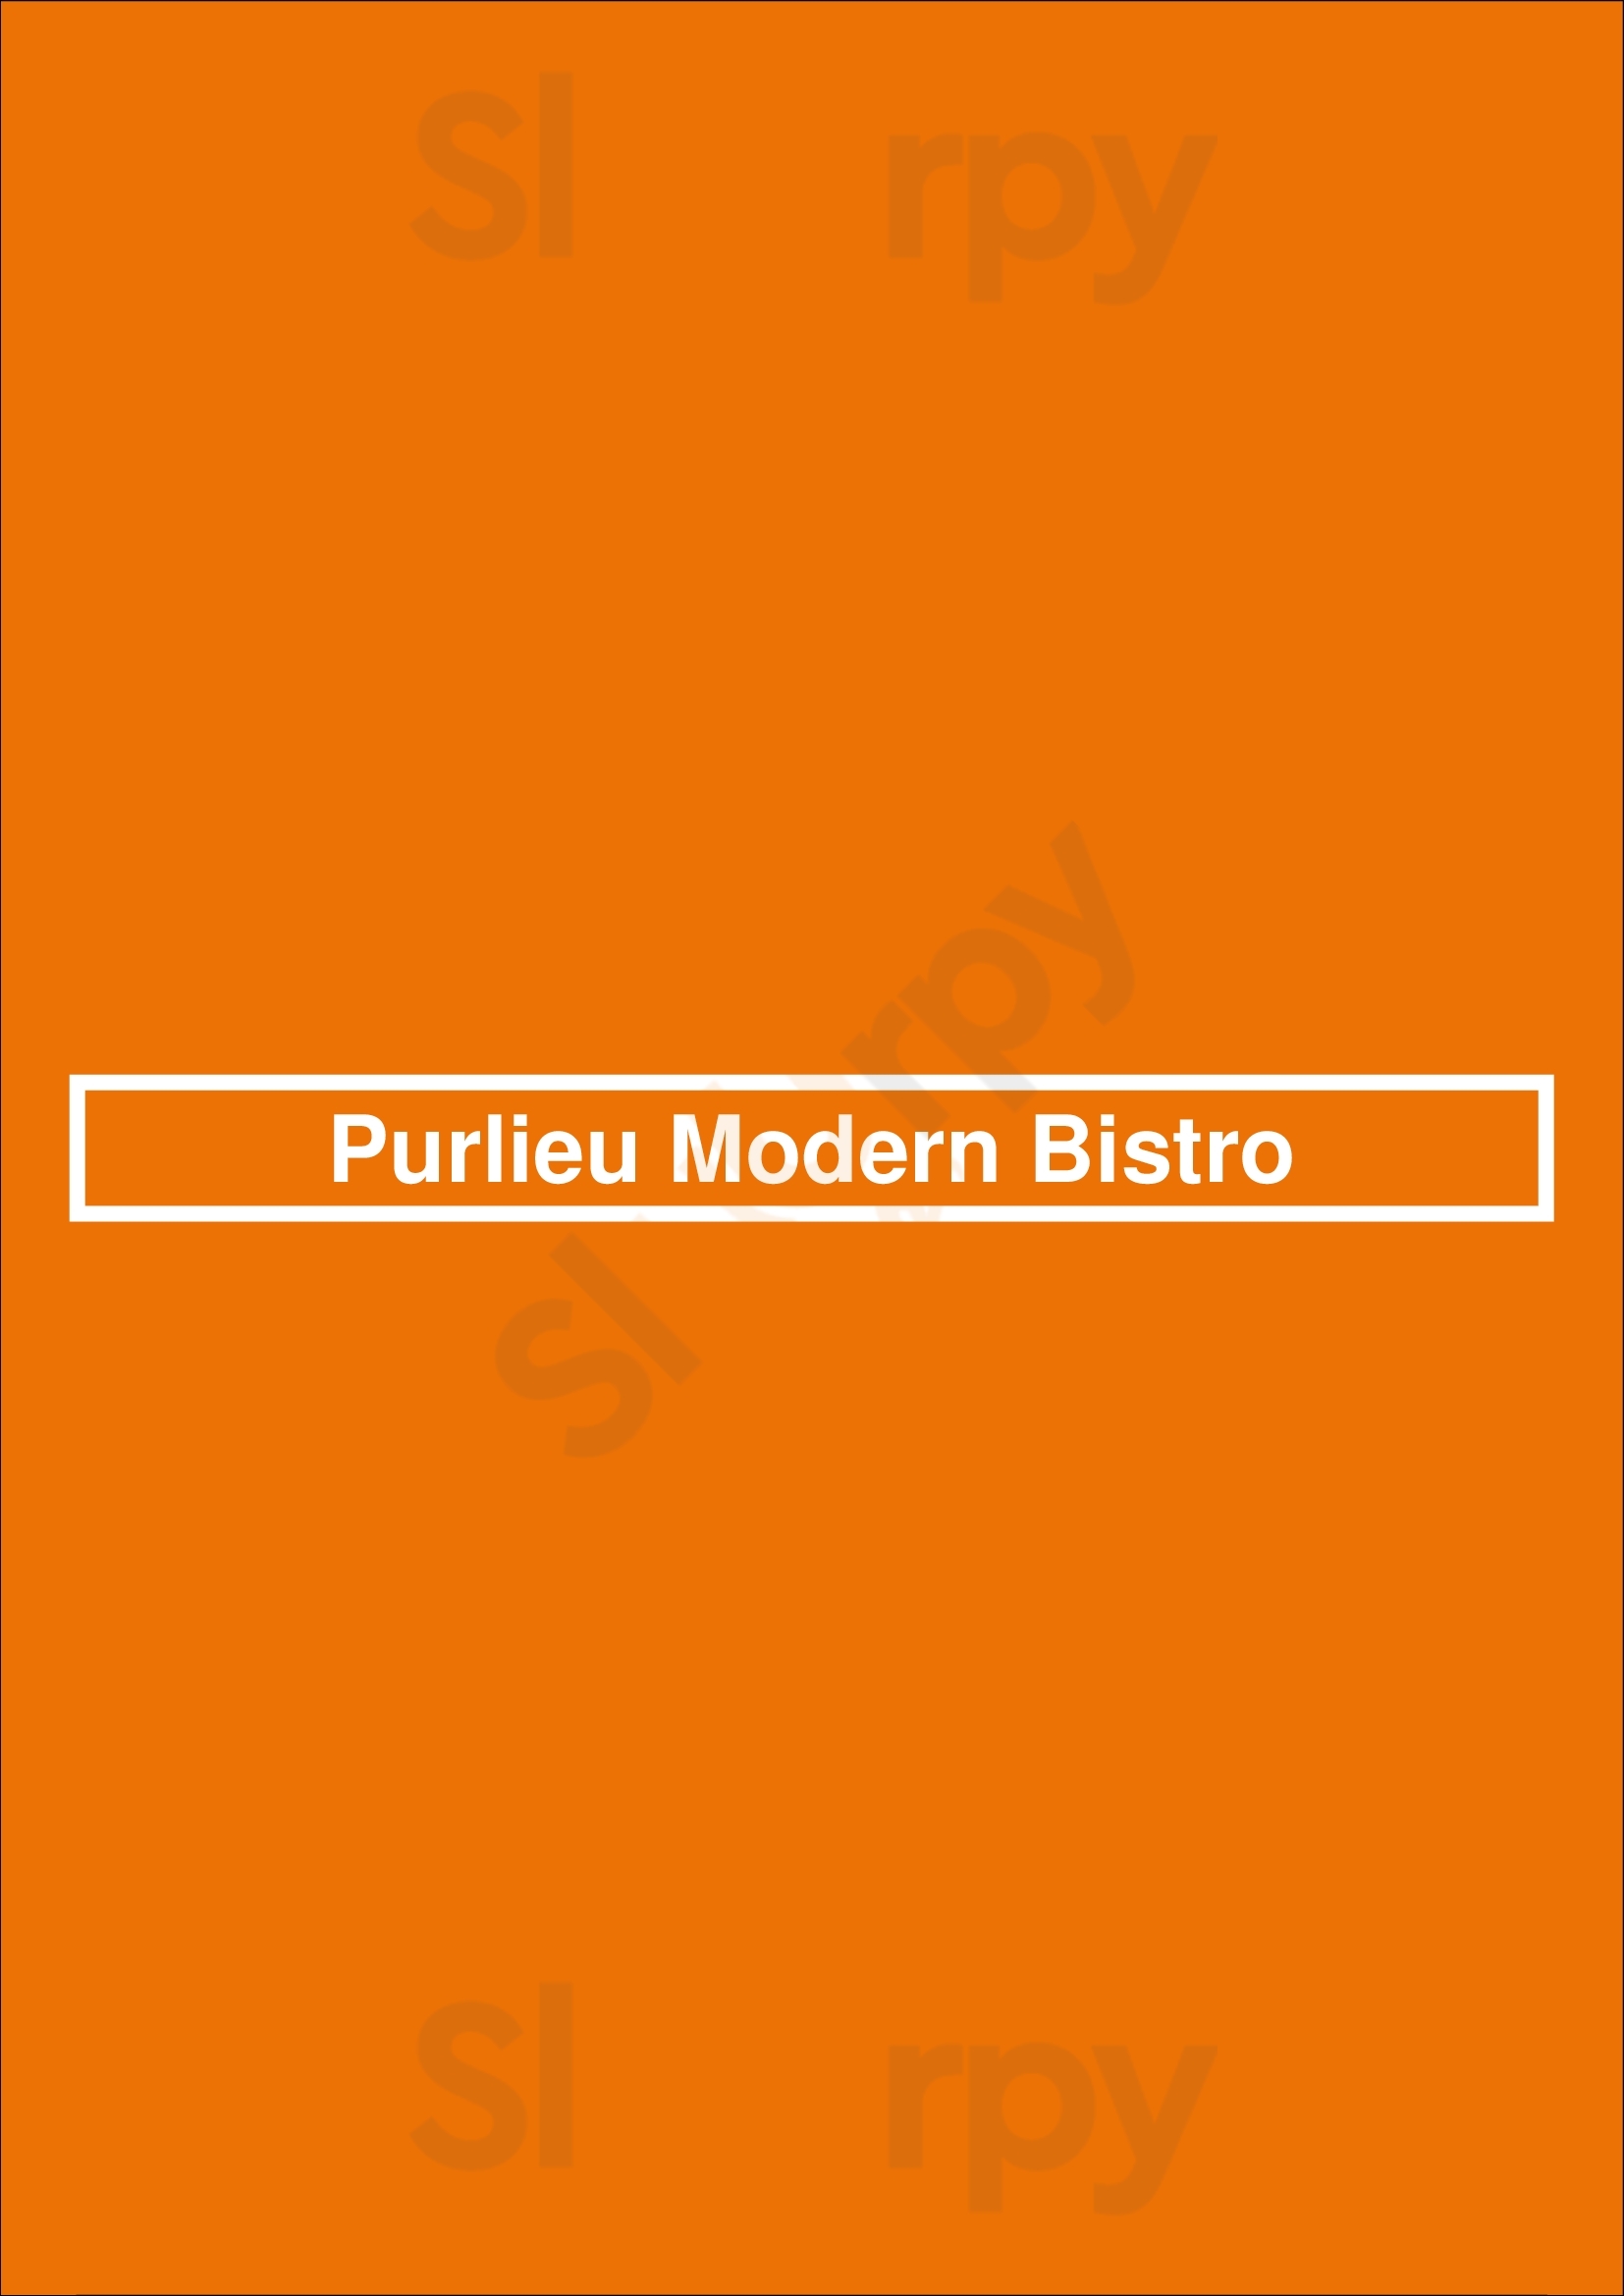 Purlieu Modern Bistro Calgary Menu - 1